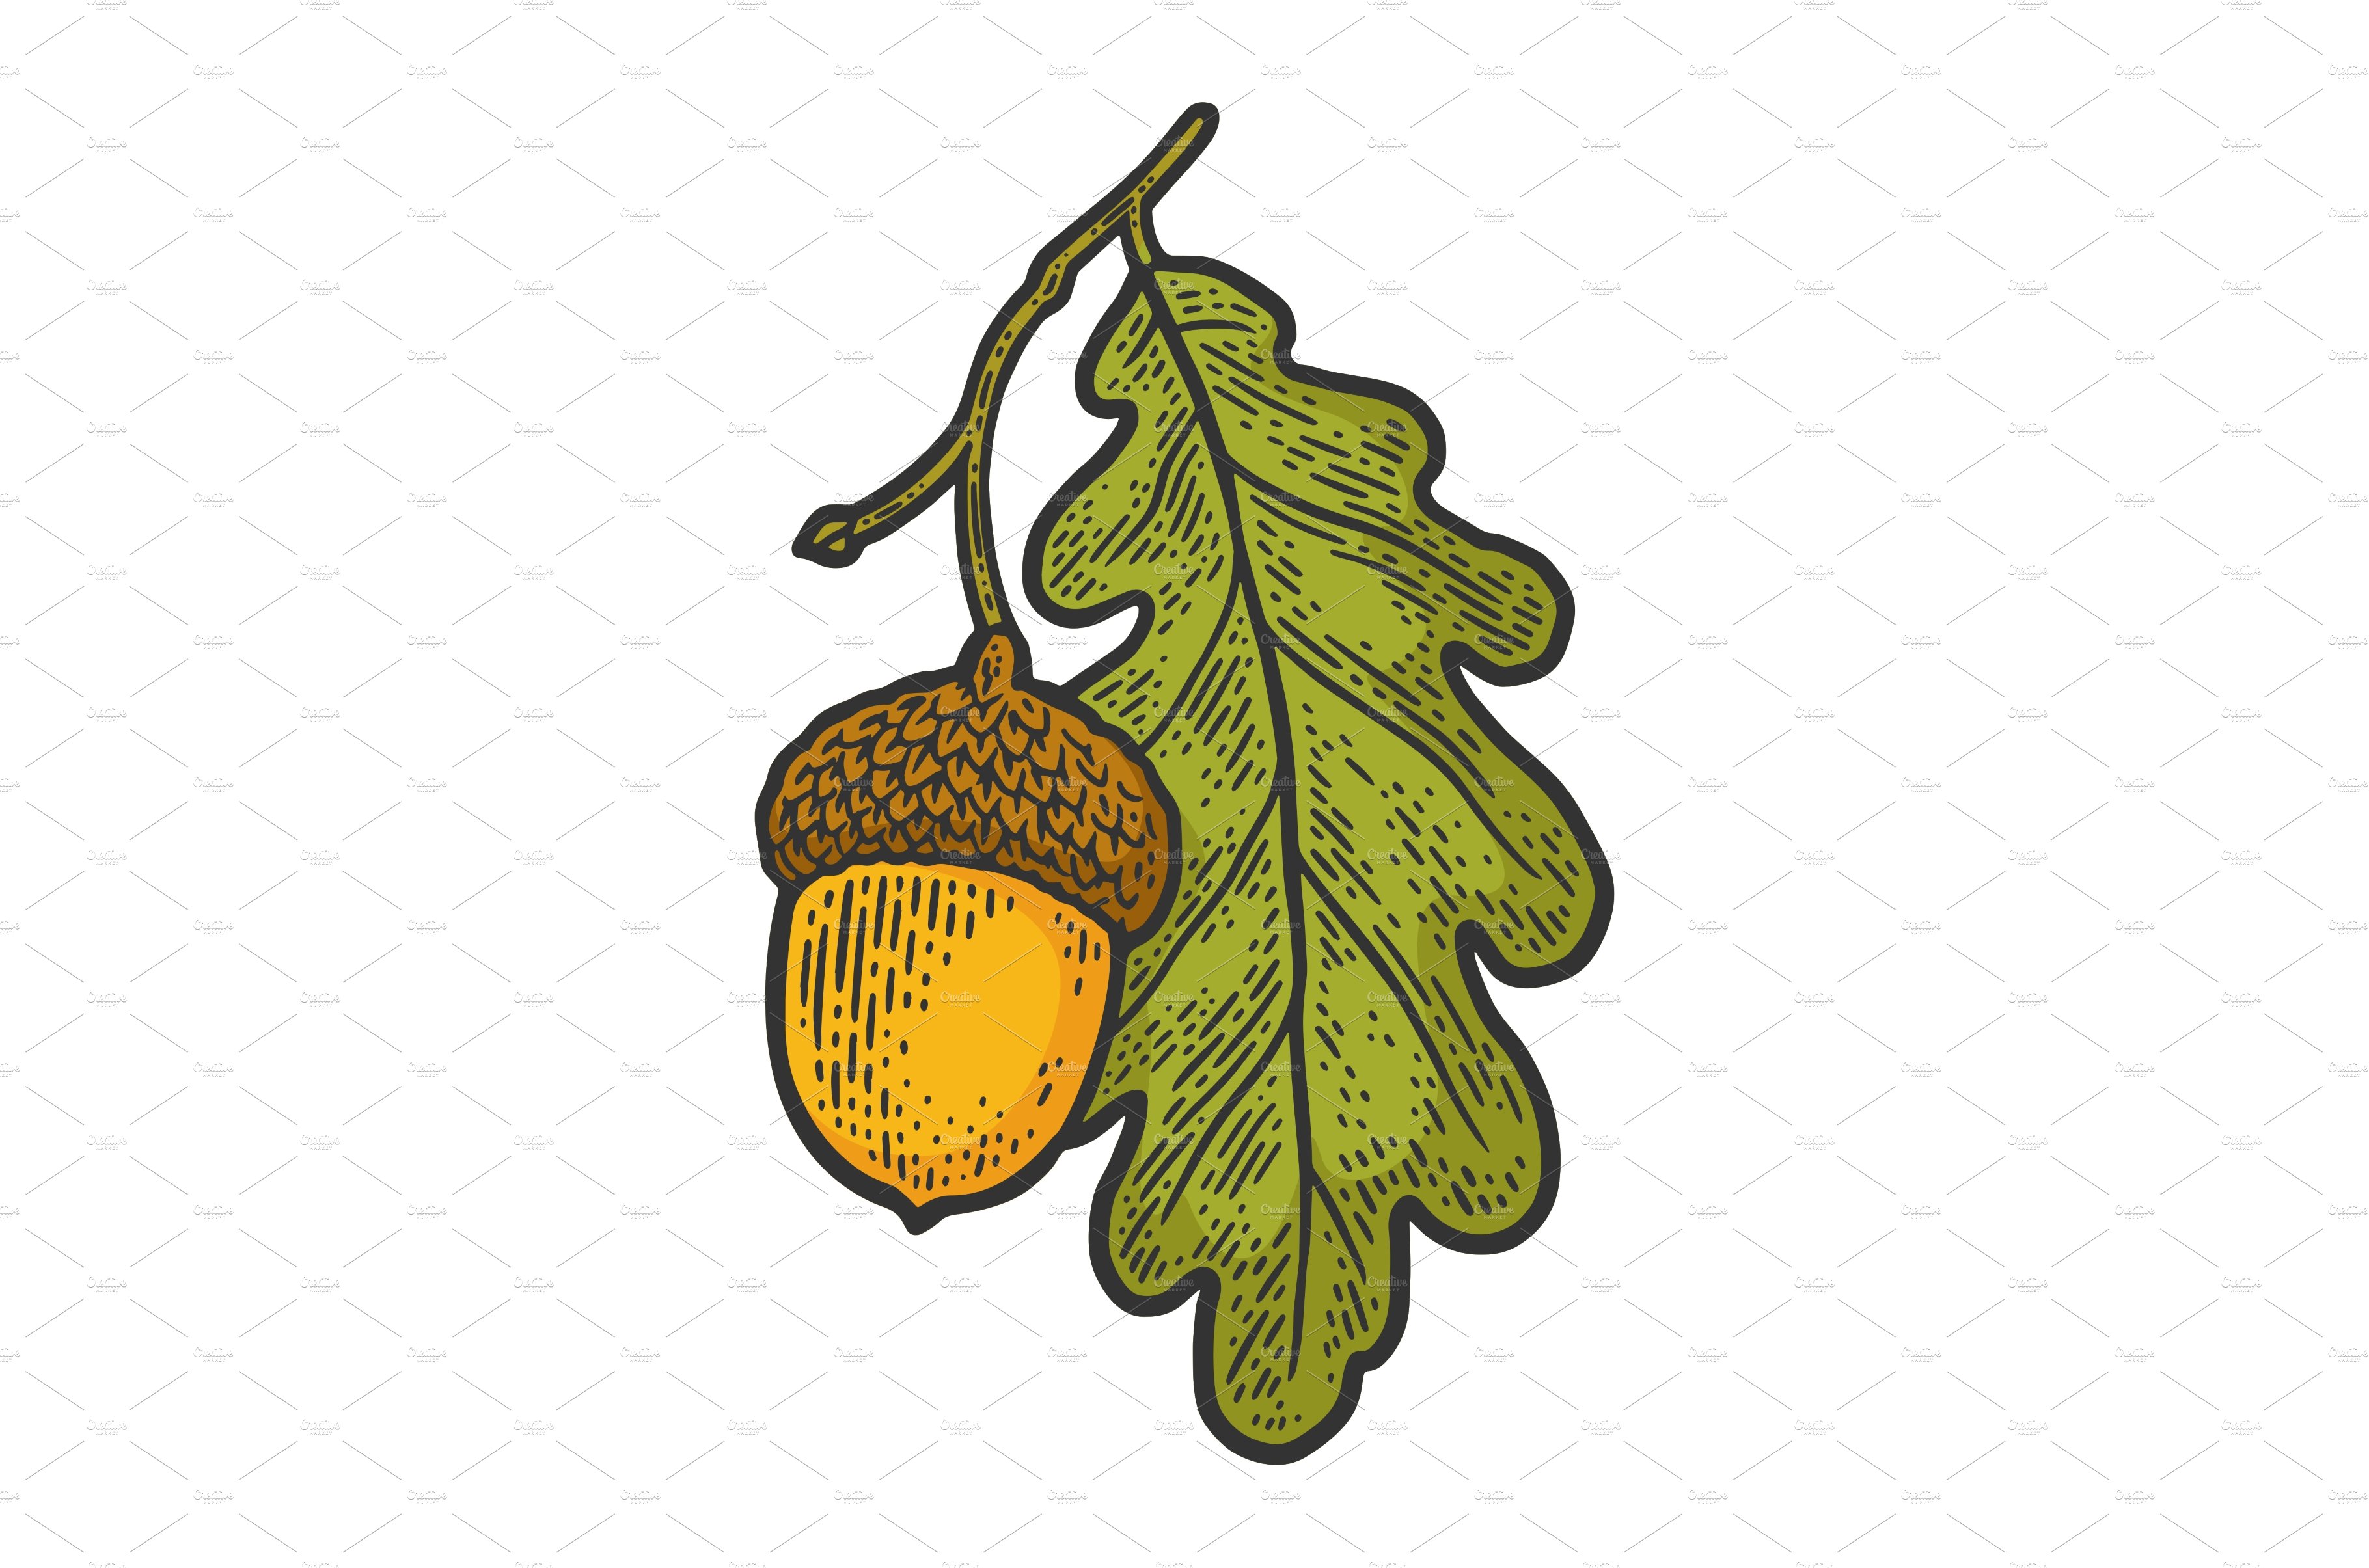 acorn with oak leaf sketch vector cover image.